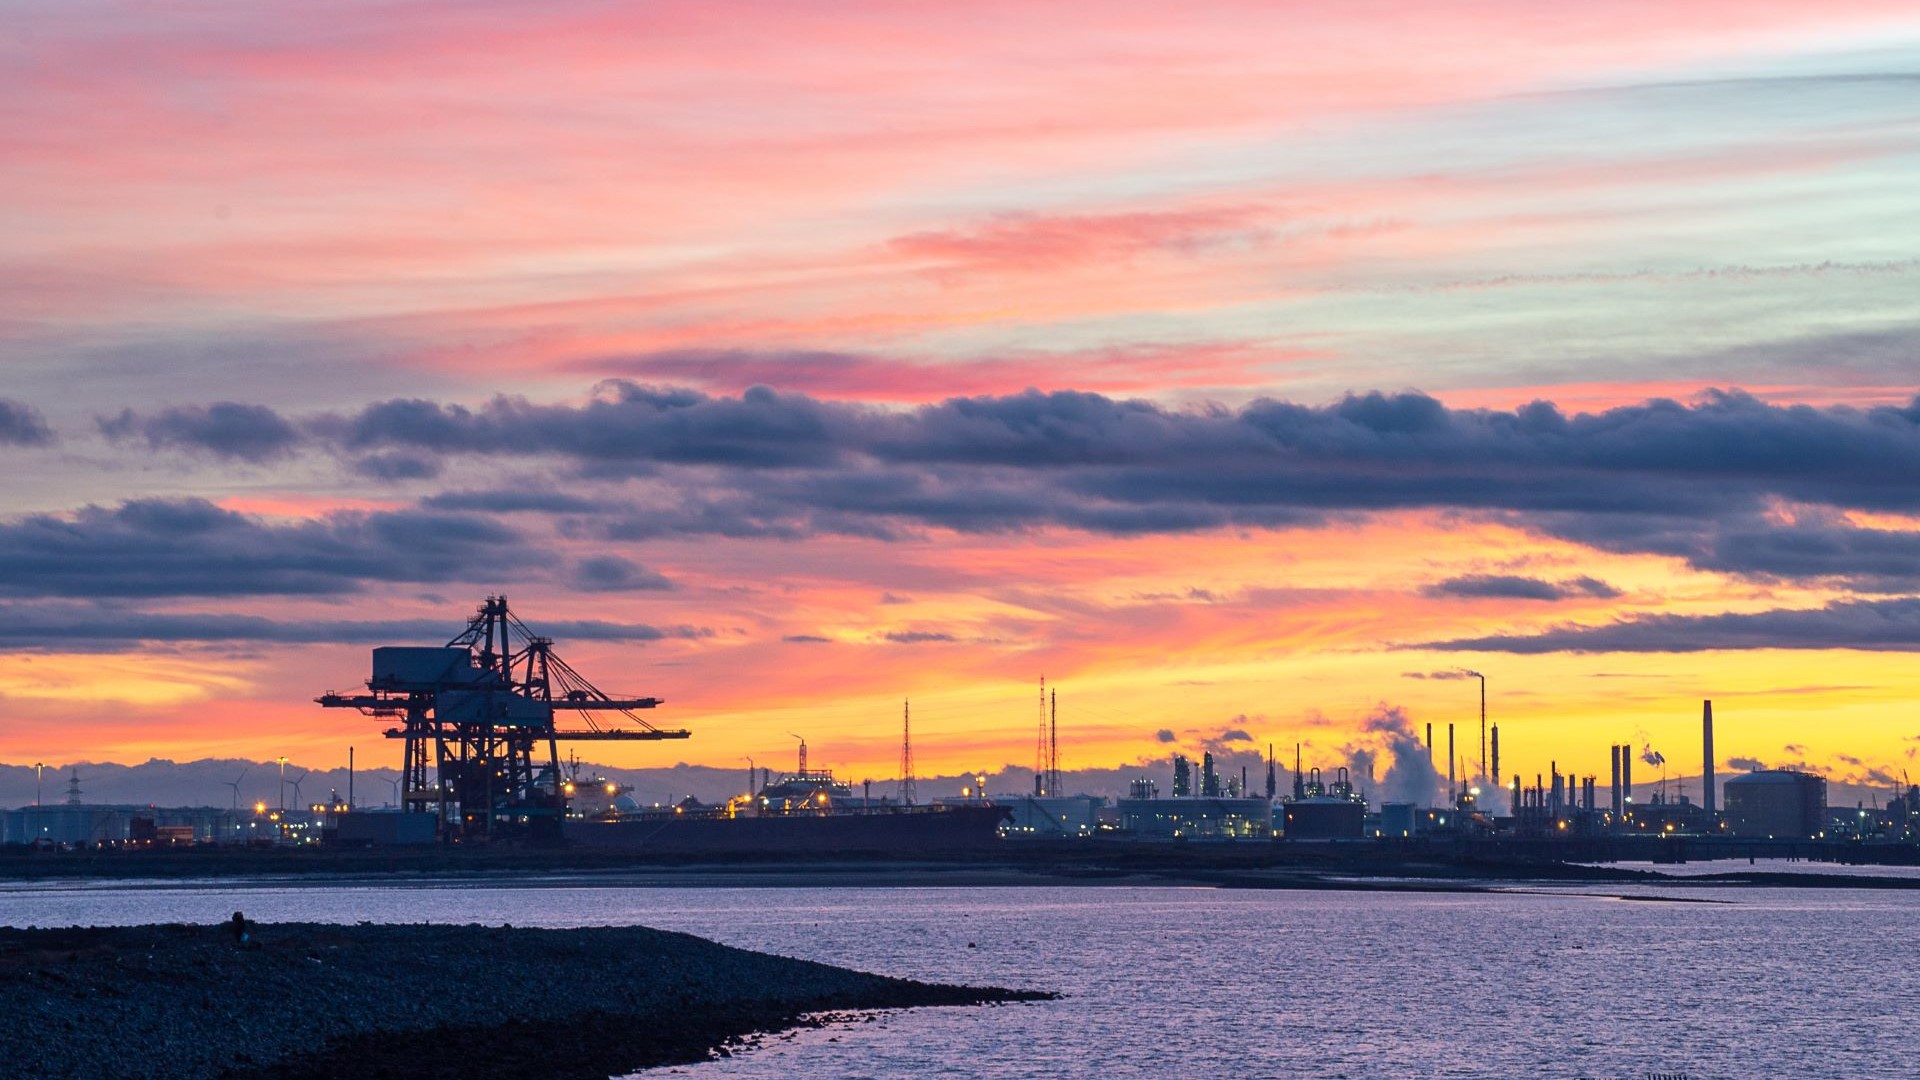 Teesside industry in distance, set against sunset skyline backdrop